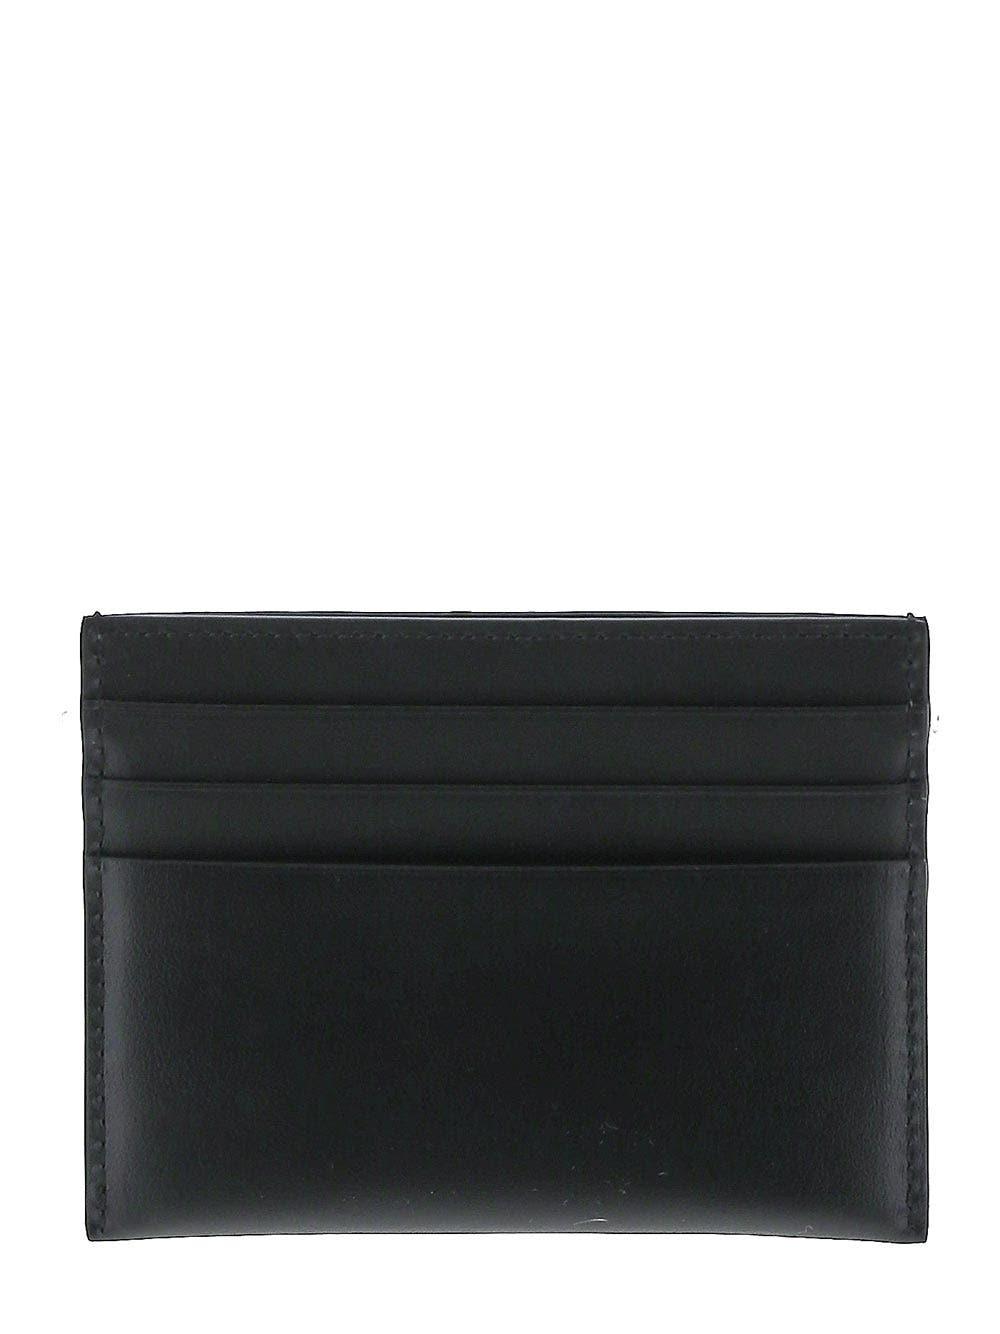 Shop Givenchy Black Card Case